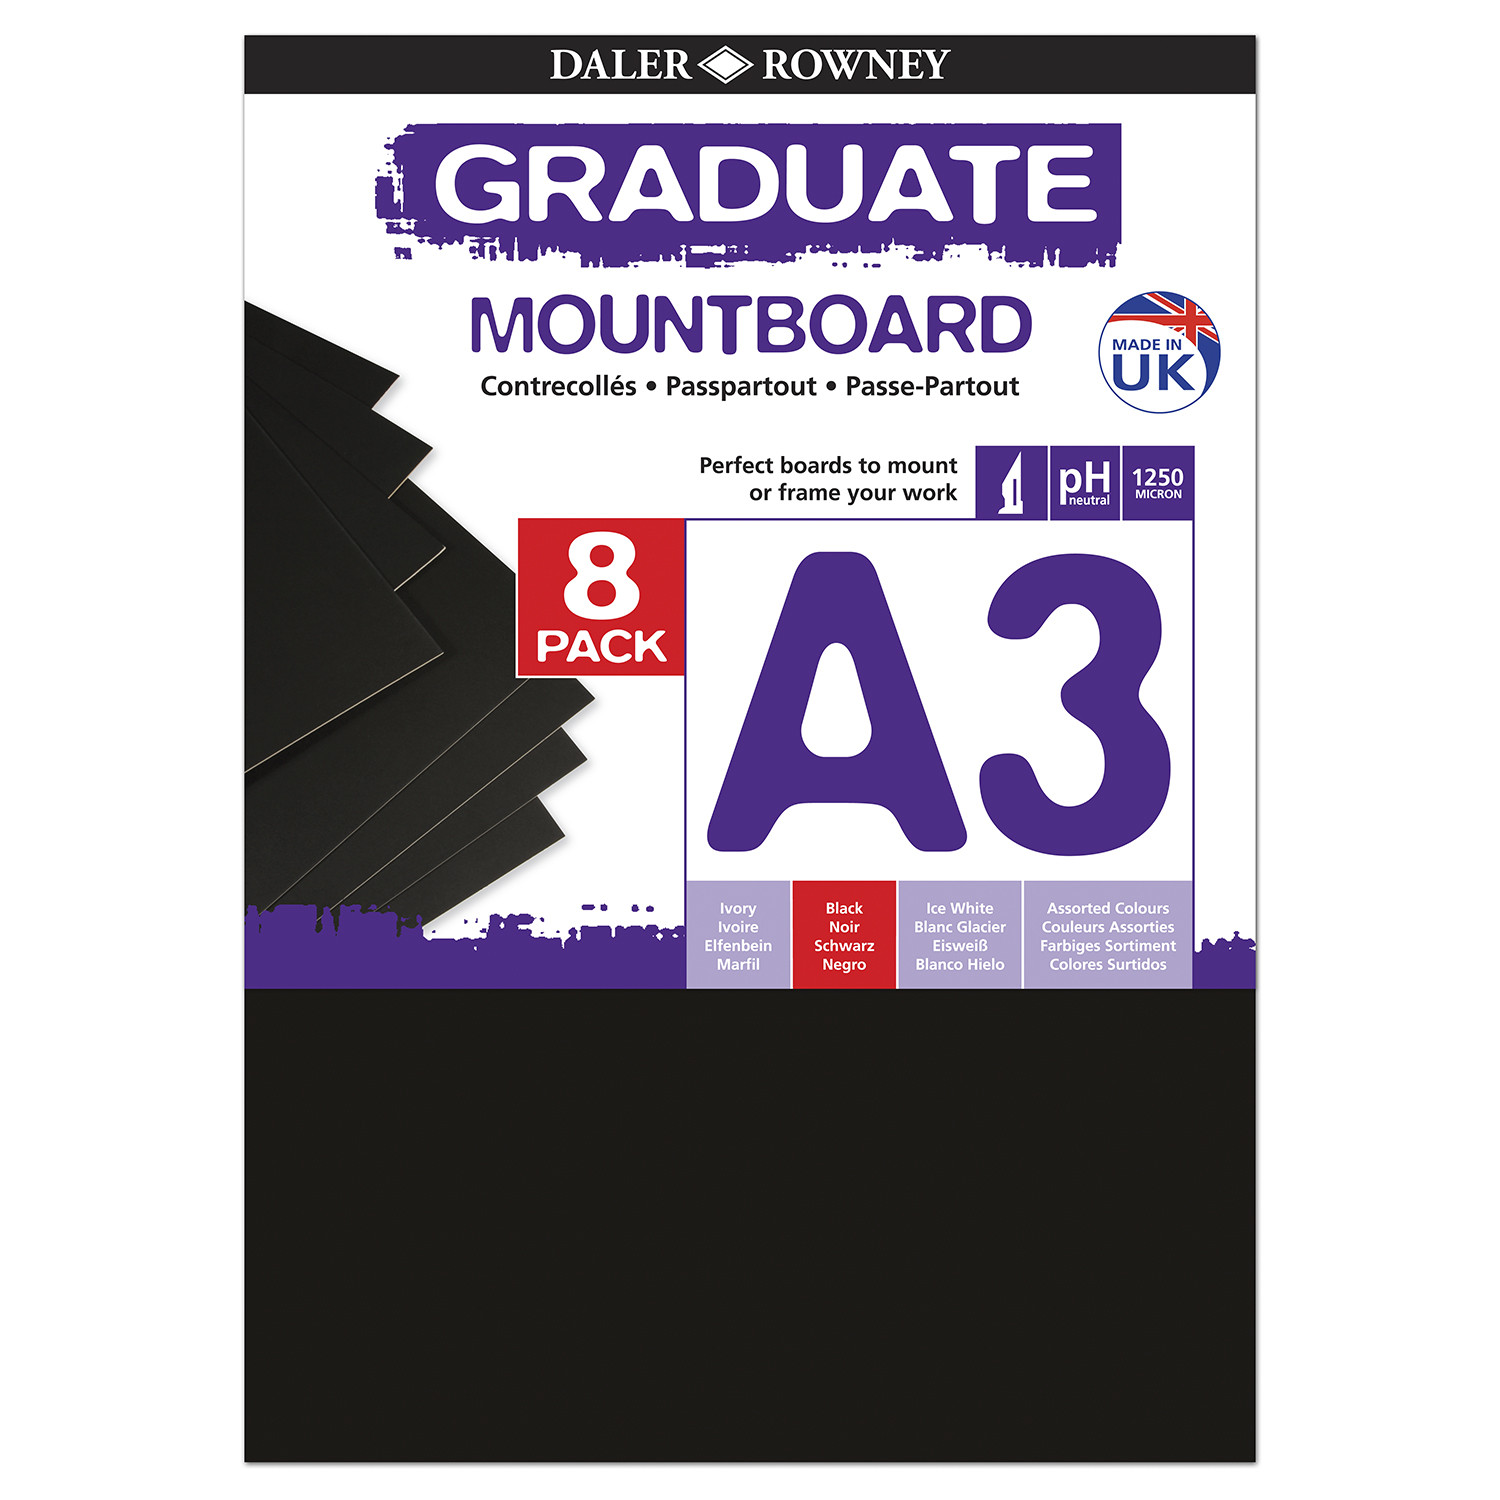 Daler-Rowney Graduate Black Mountboard A3 8 Pack Image